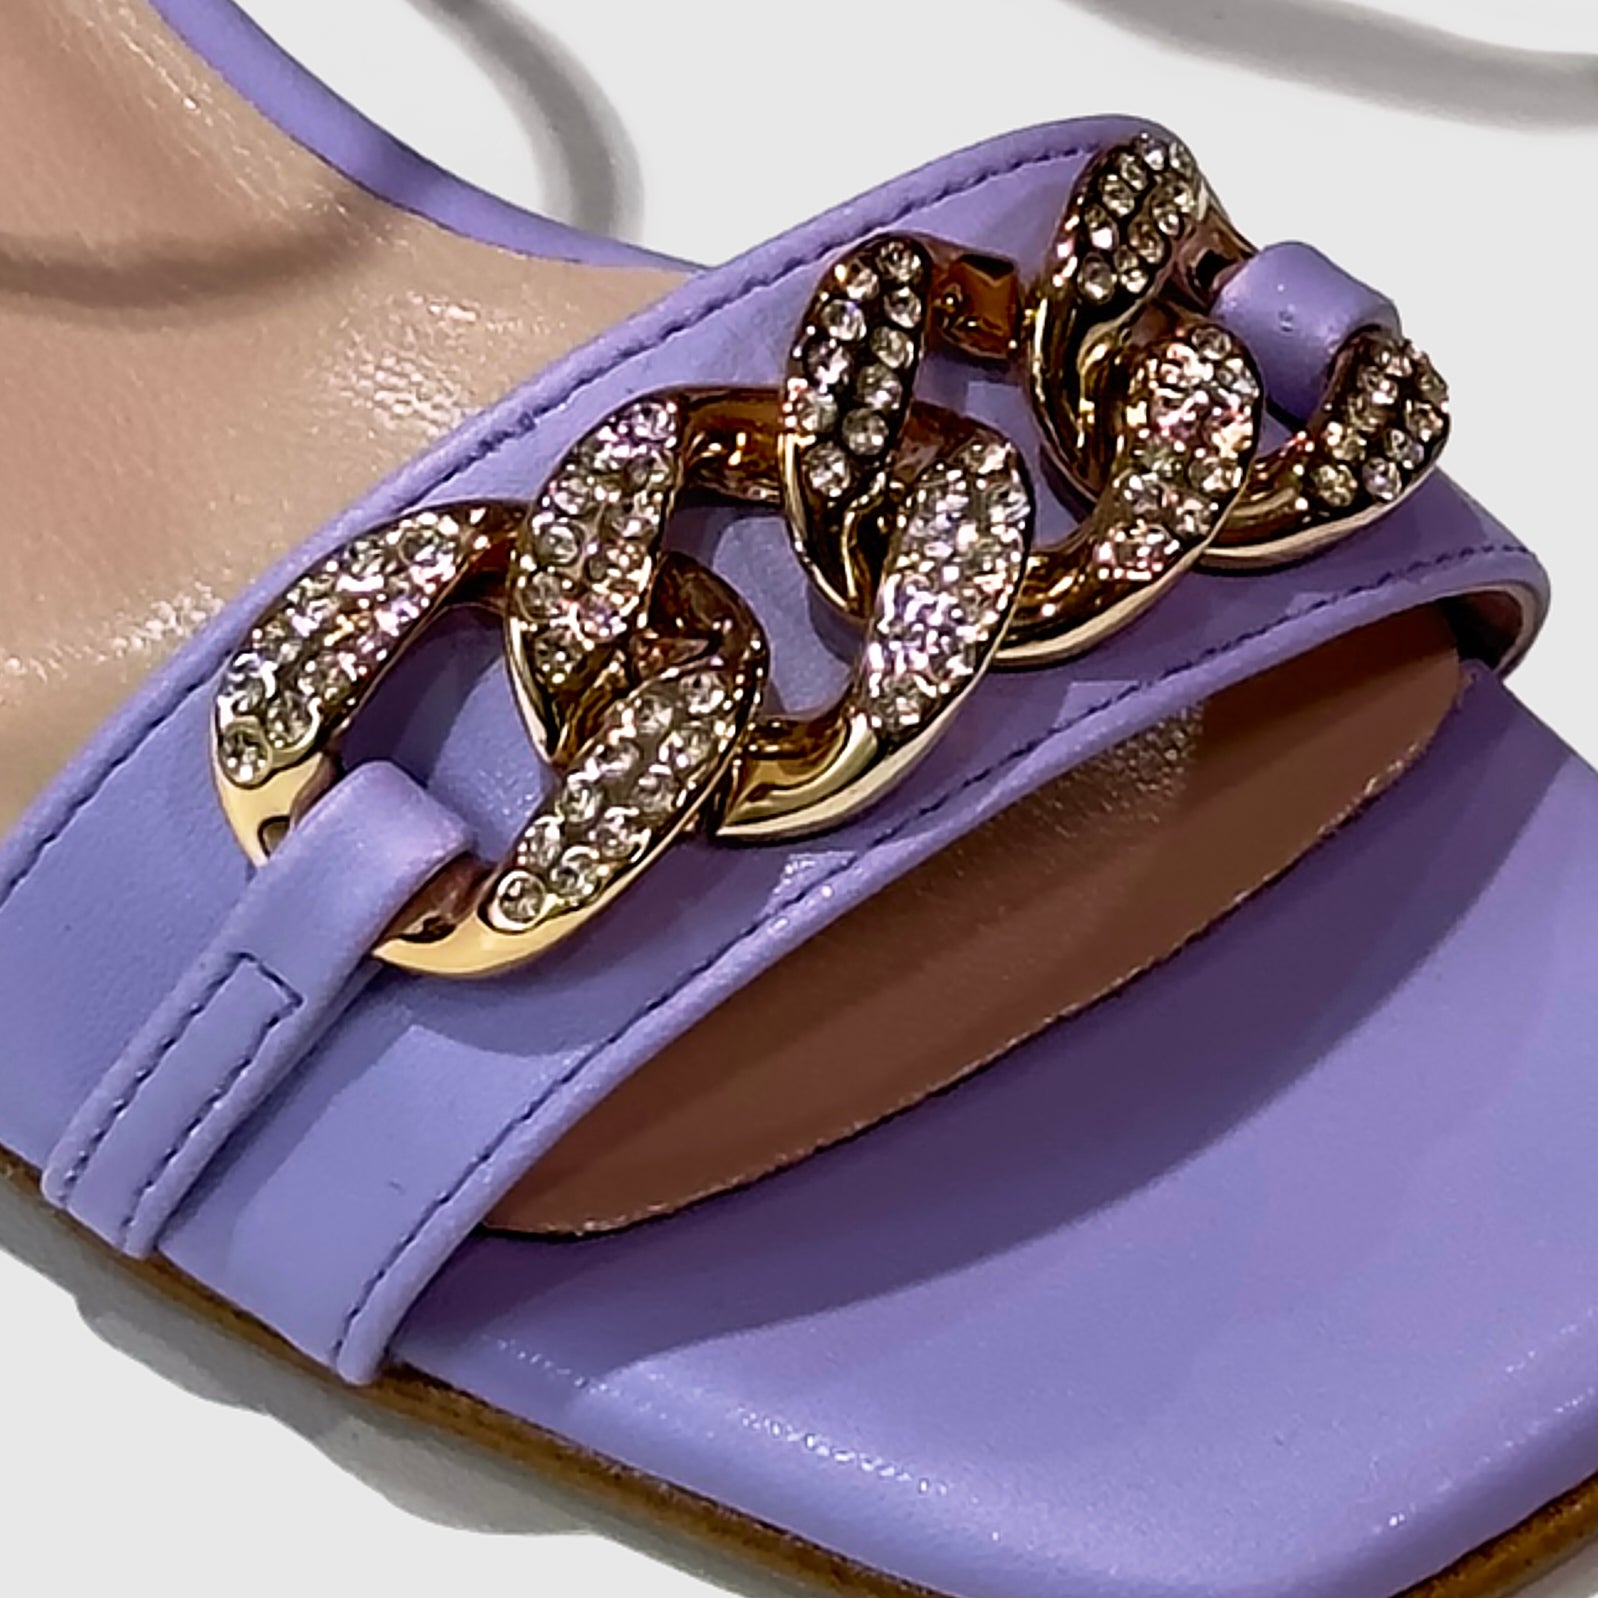 Sandalia cadena con strass lila